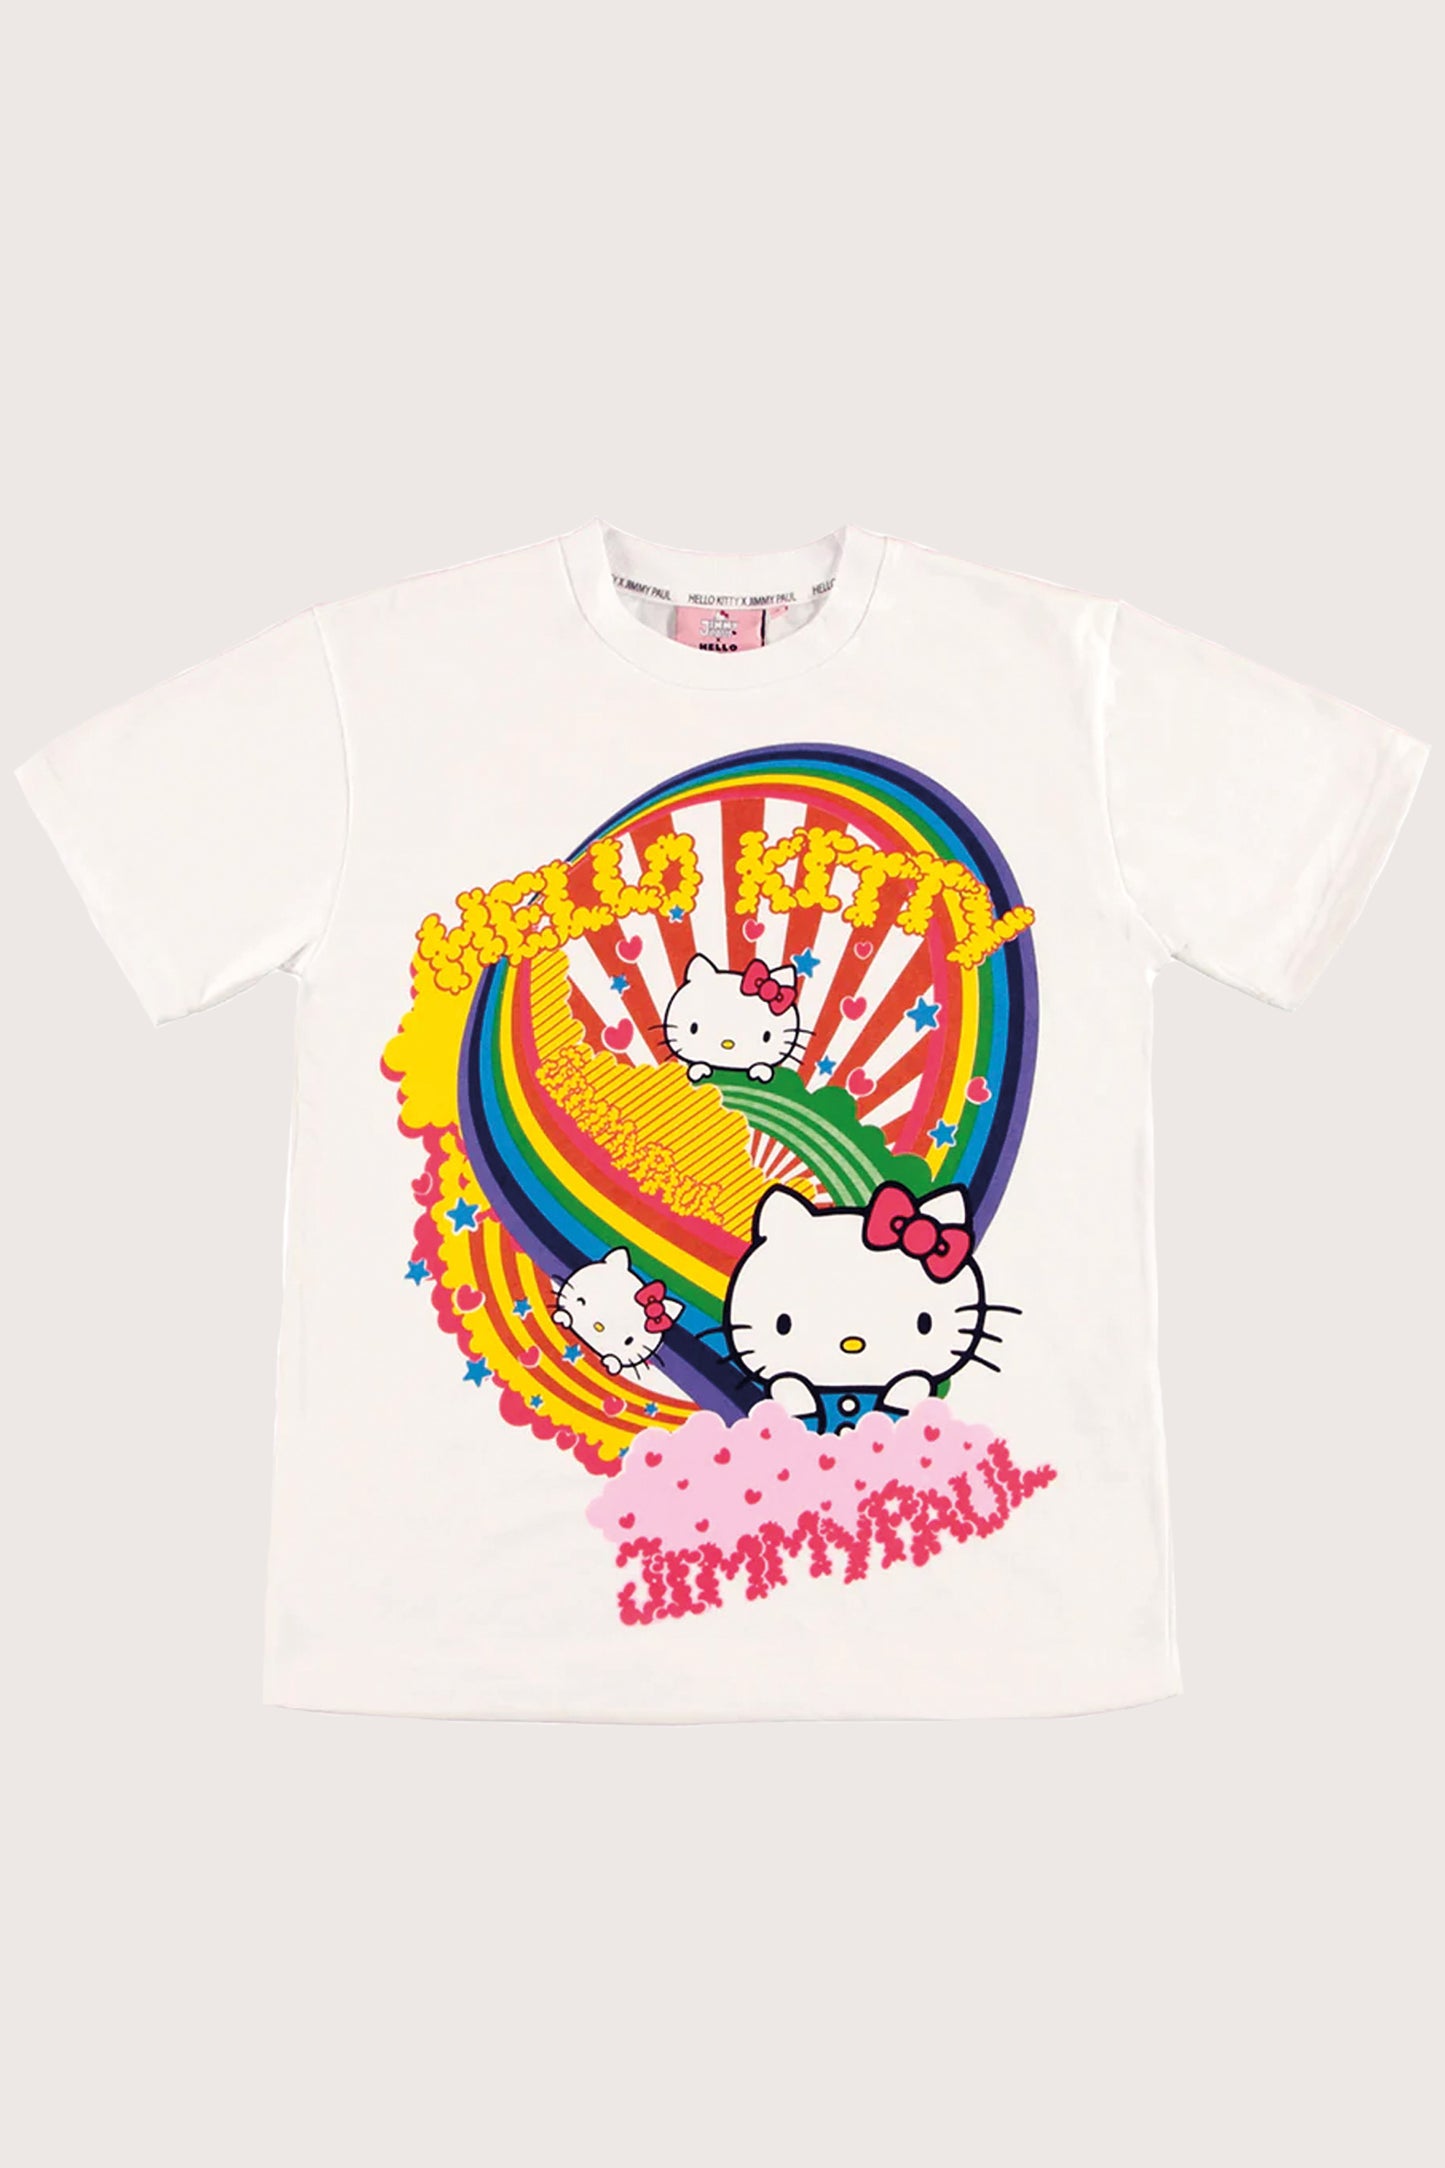 JimmyPaul x Hello Kitty - White Colourful Print Top